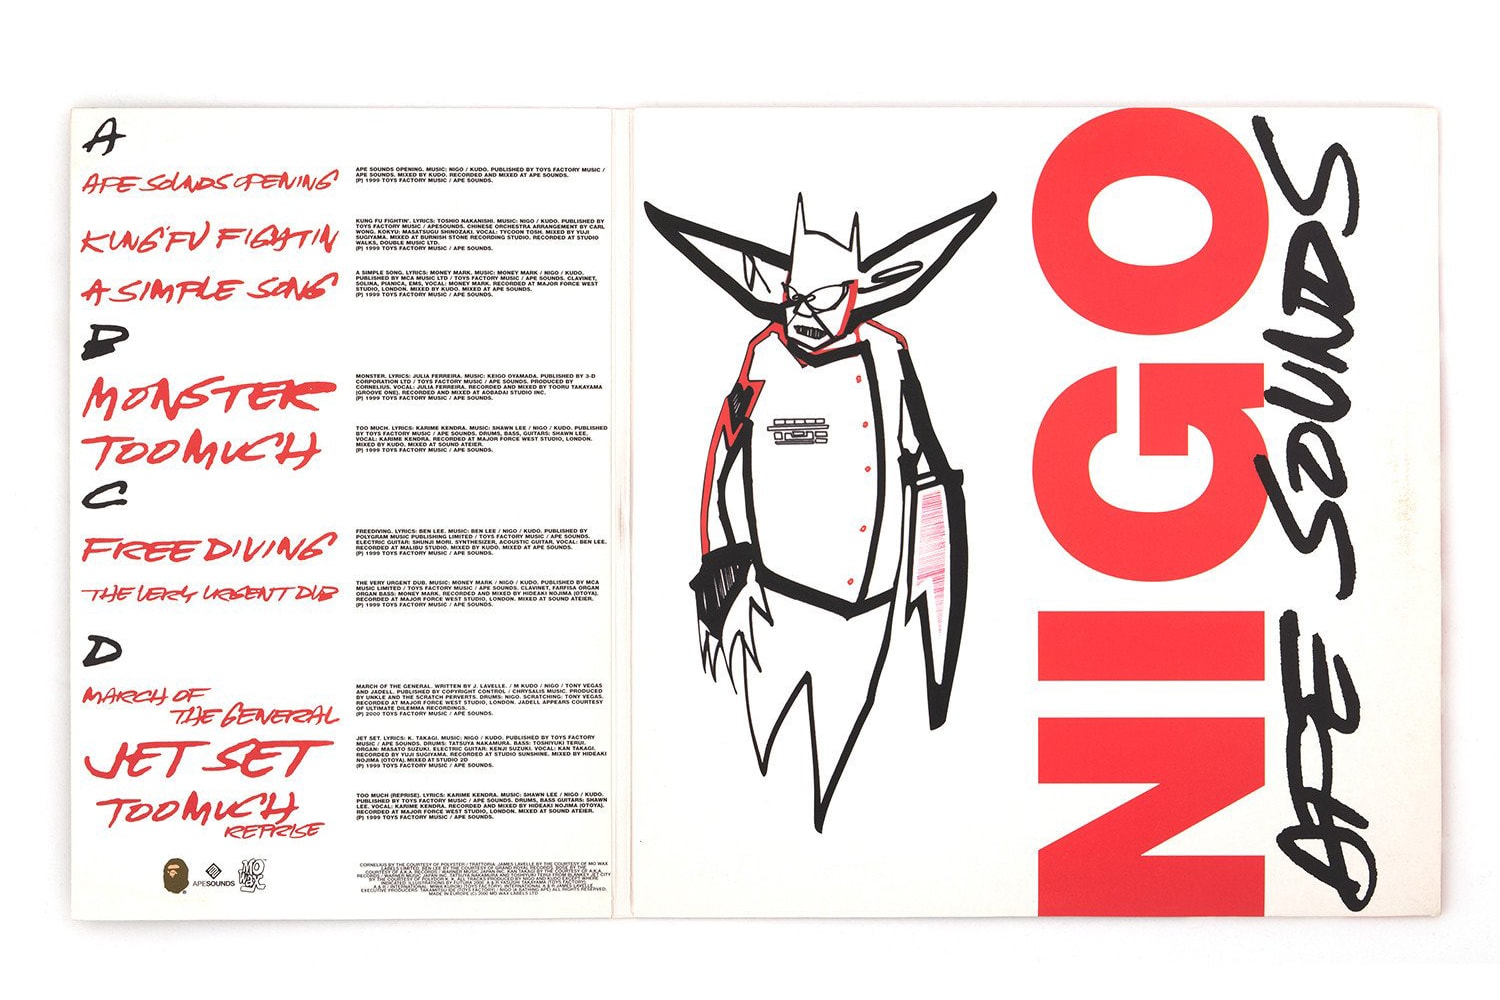 由《Ape Sounds》揭開 NIGO 的 B 面人生 | Cover Art